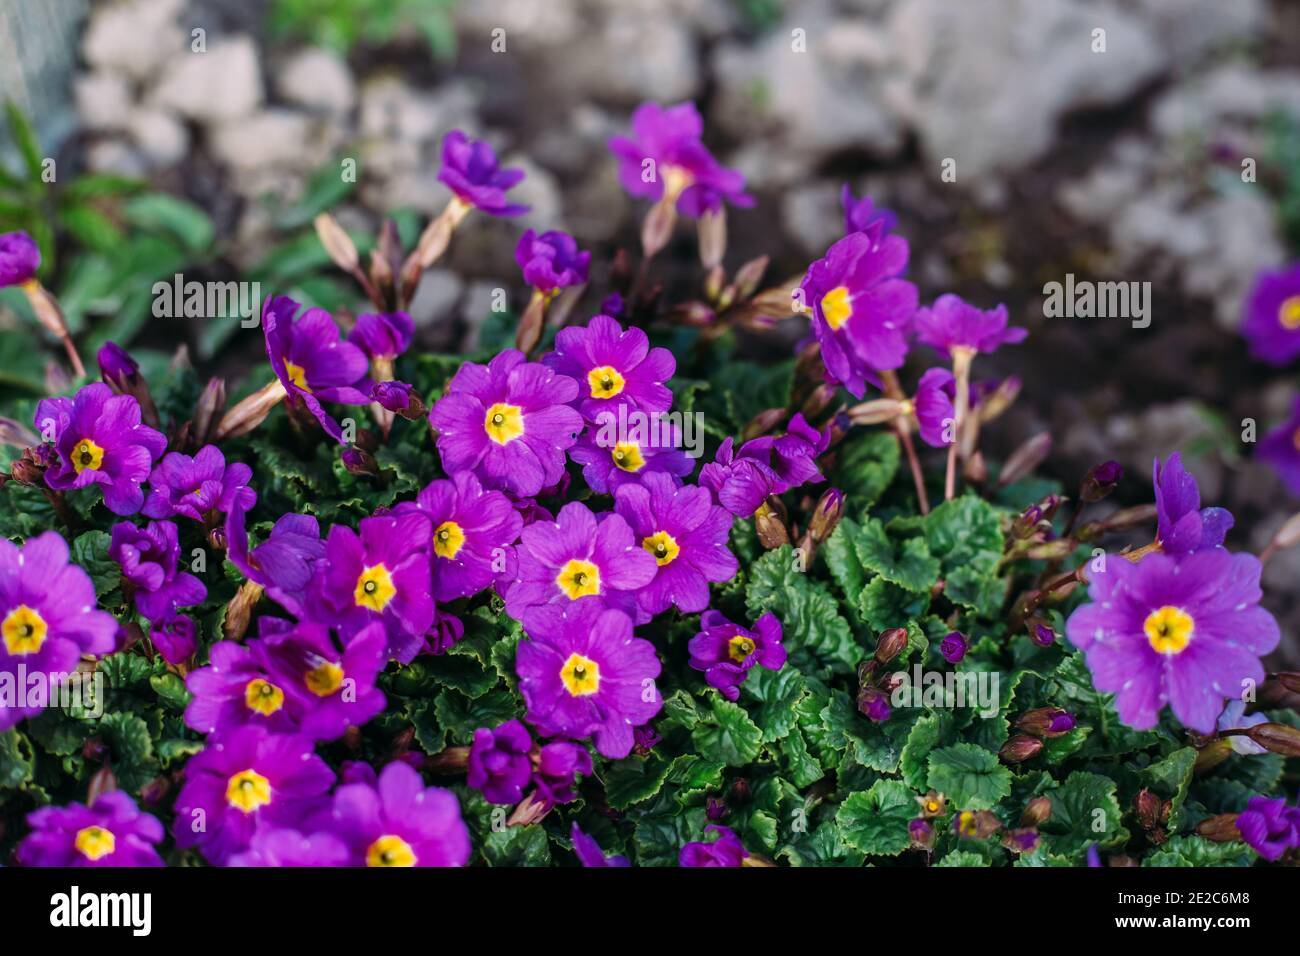 Spring Purple Flowers Perennial primrose or primula in the spring garden. Primroses in spring. The beautiful colors primrose flowers garden. Stock Photo